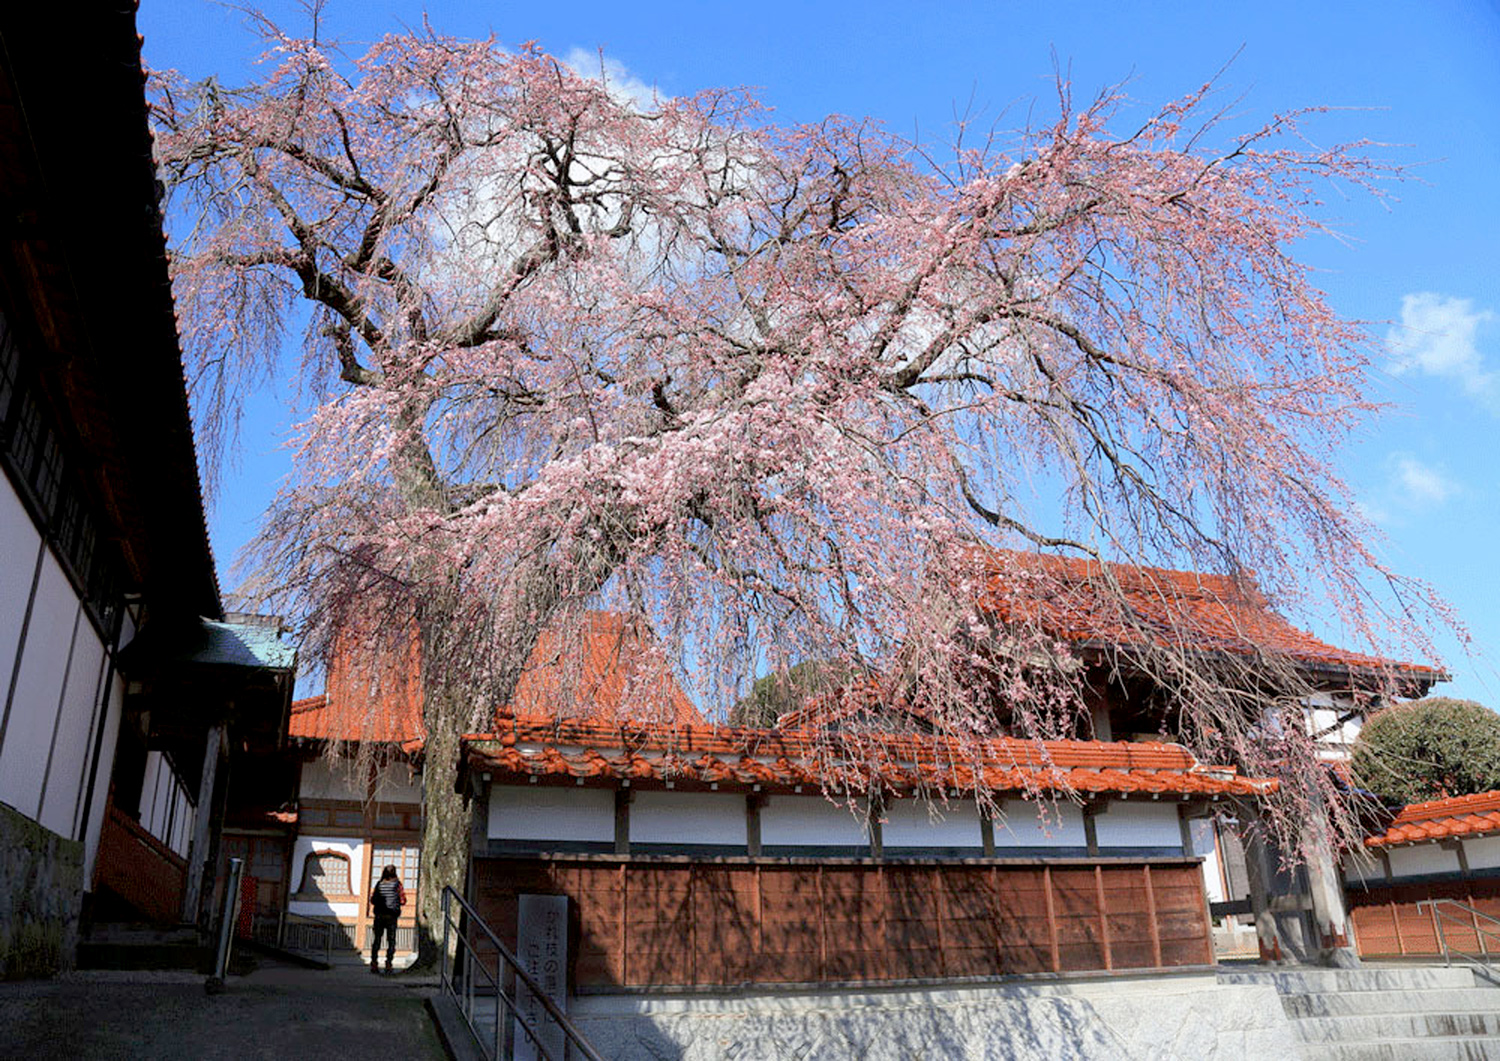 Gokurakuji Temple